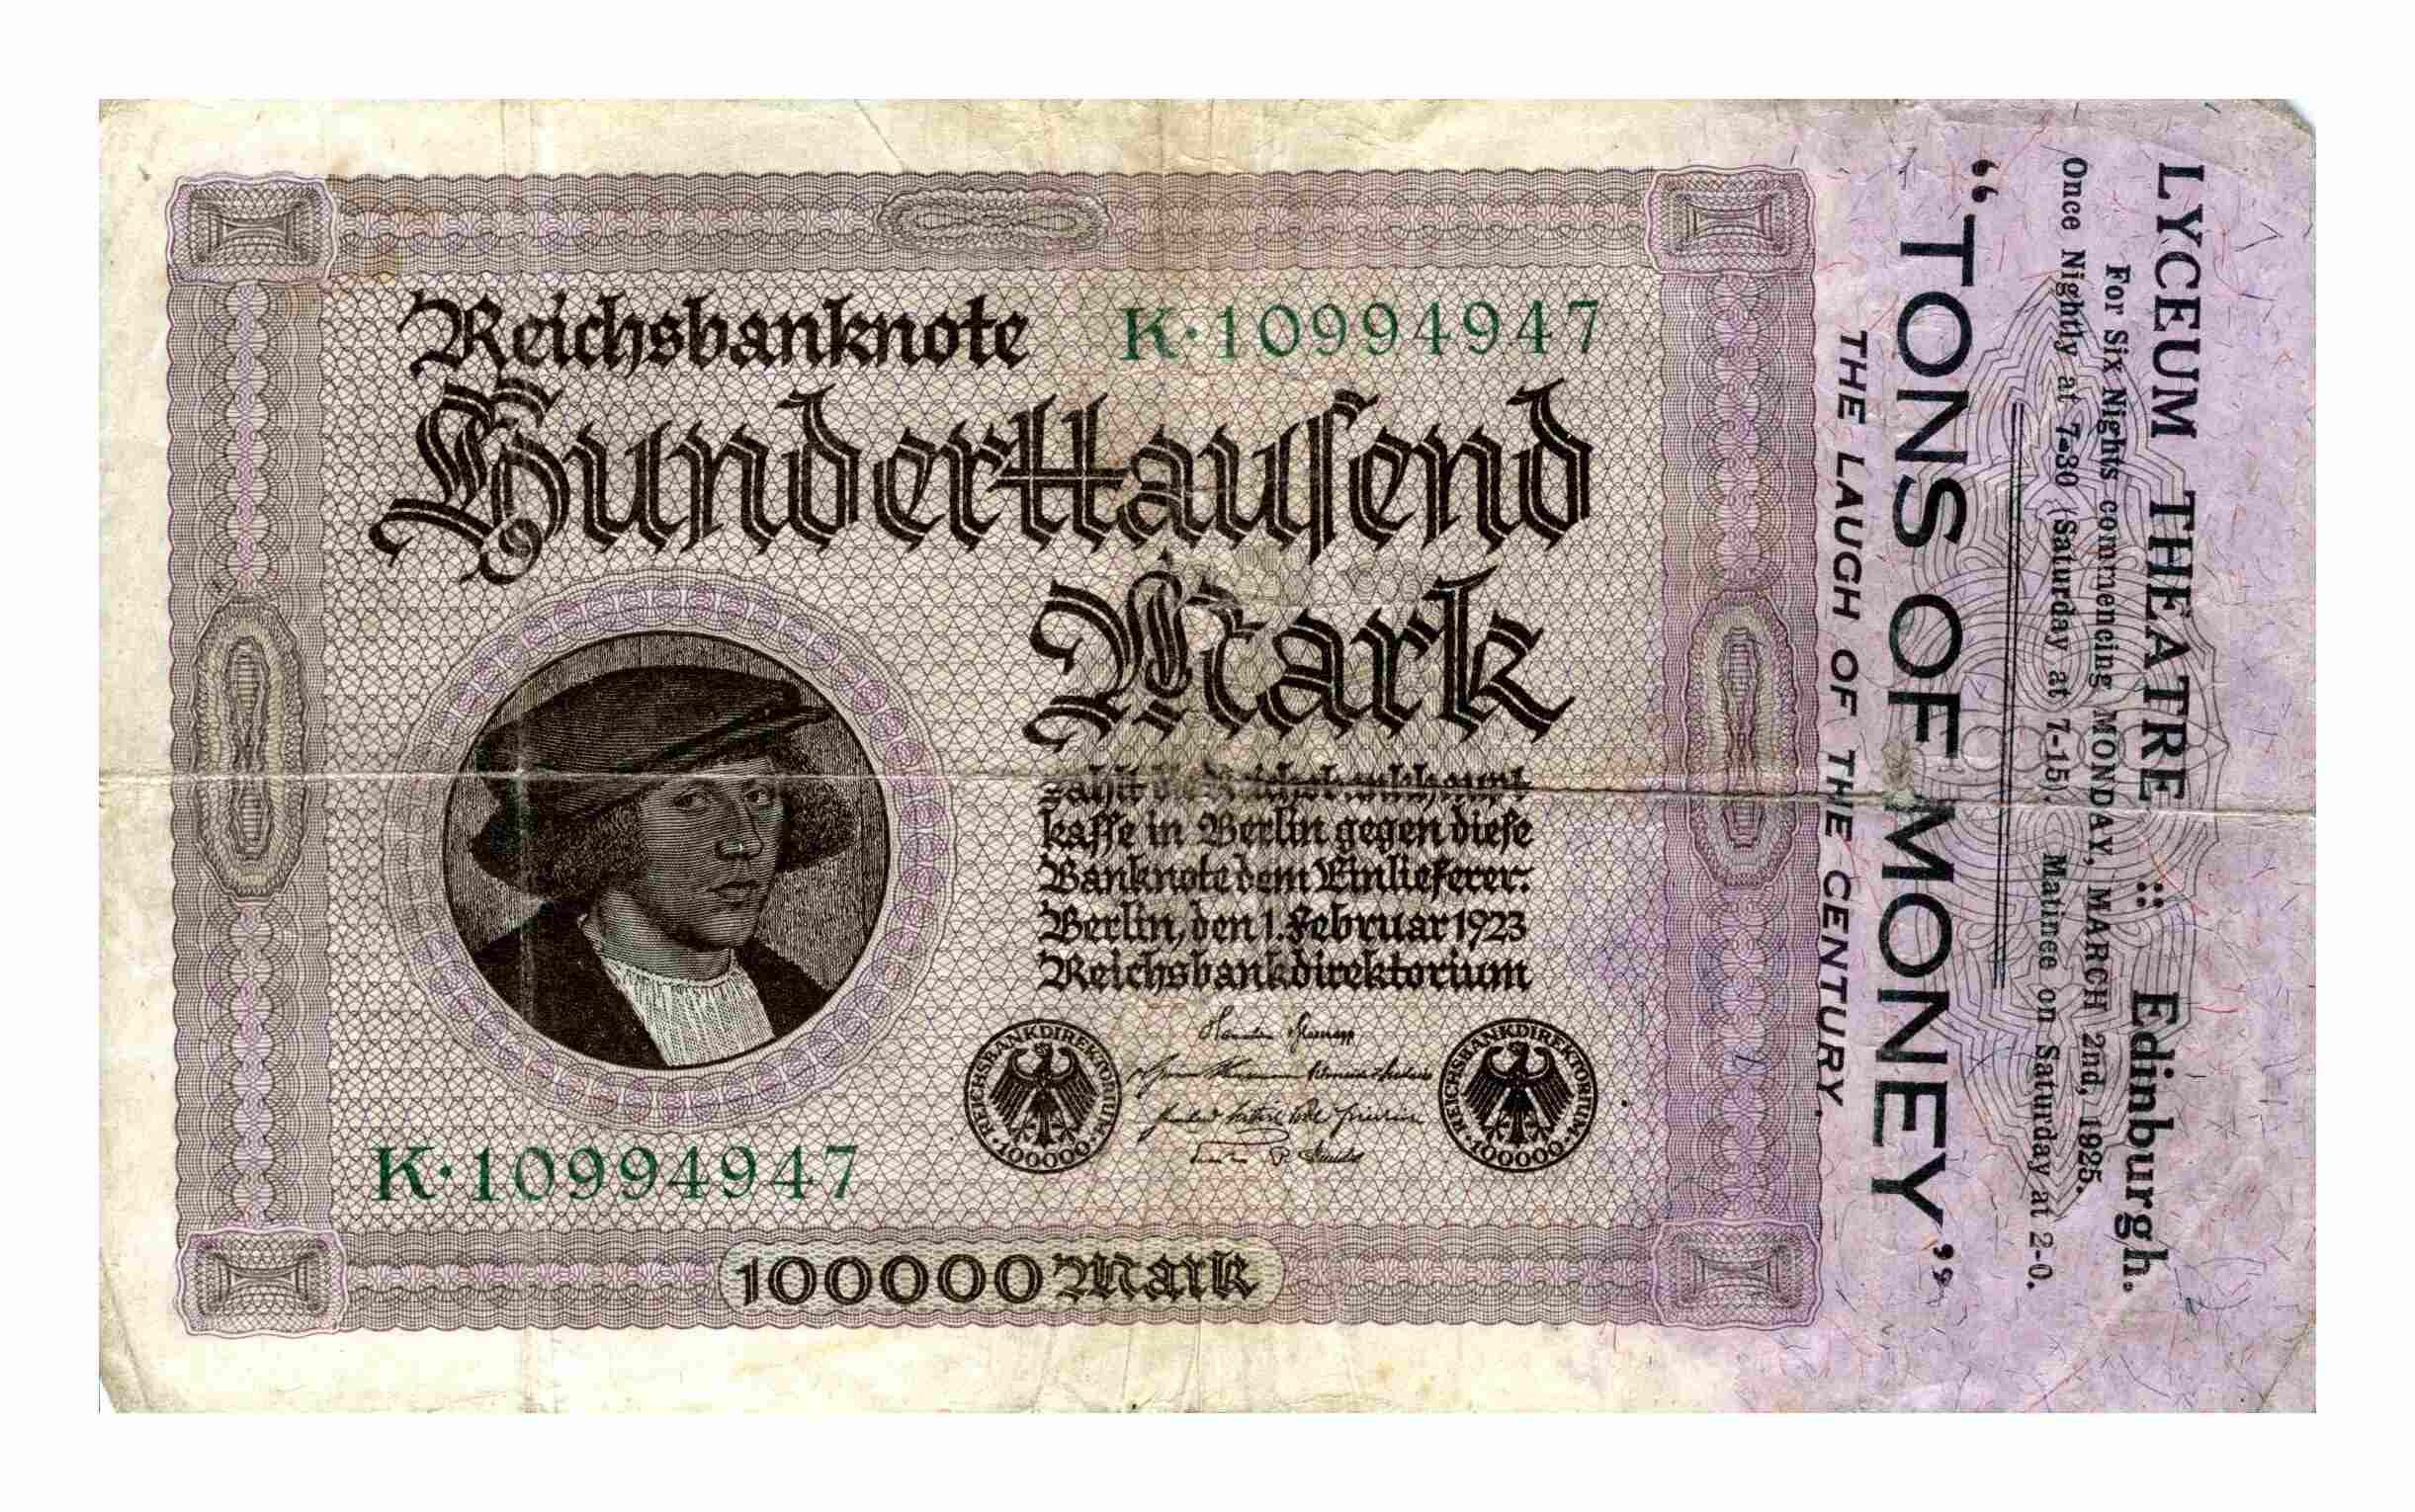 Reichsbanknote and playbill, 1923 ©City of Edinburgh Council Museums & Galleries; Museum of Edinburgh